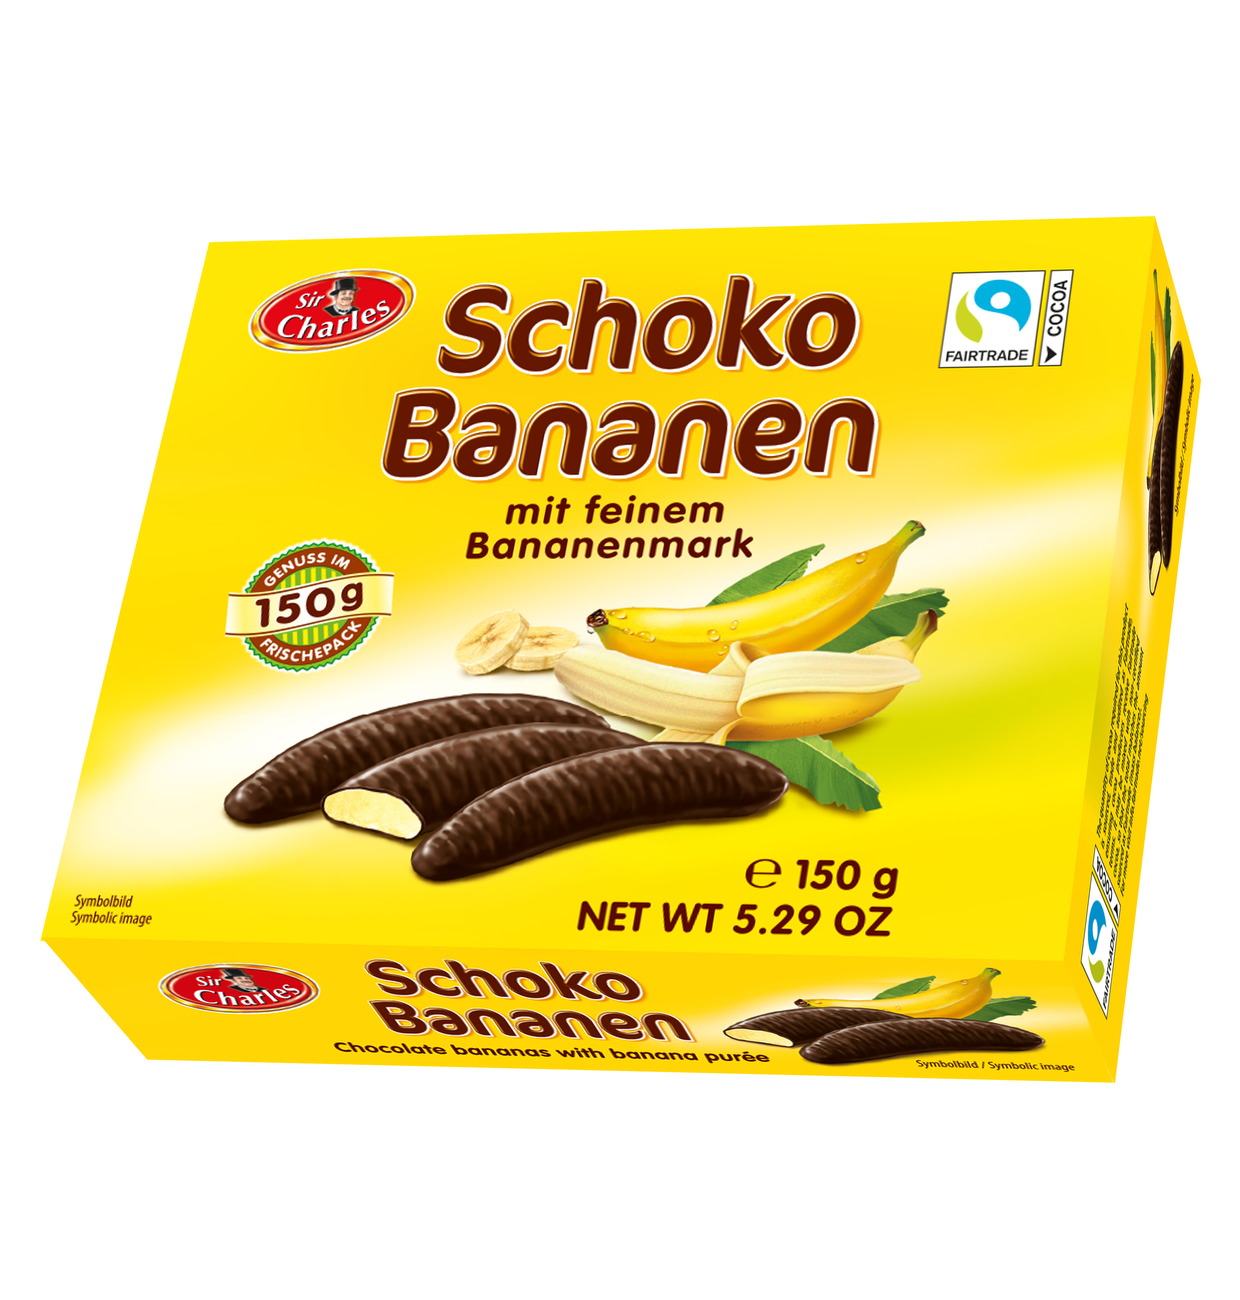 Chocolate bananas (24 x 150g)